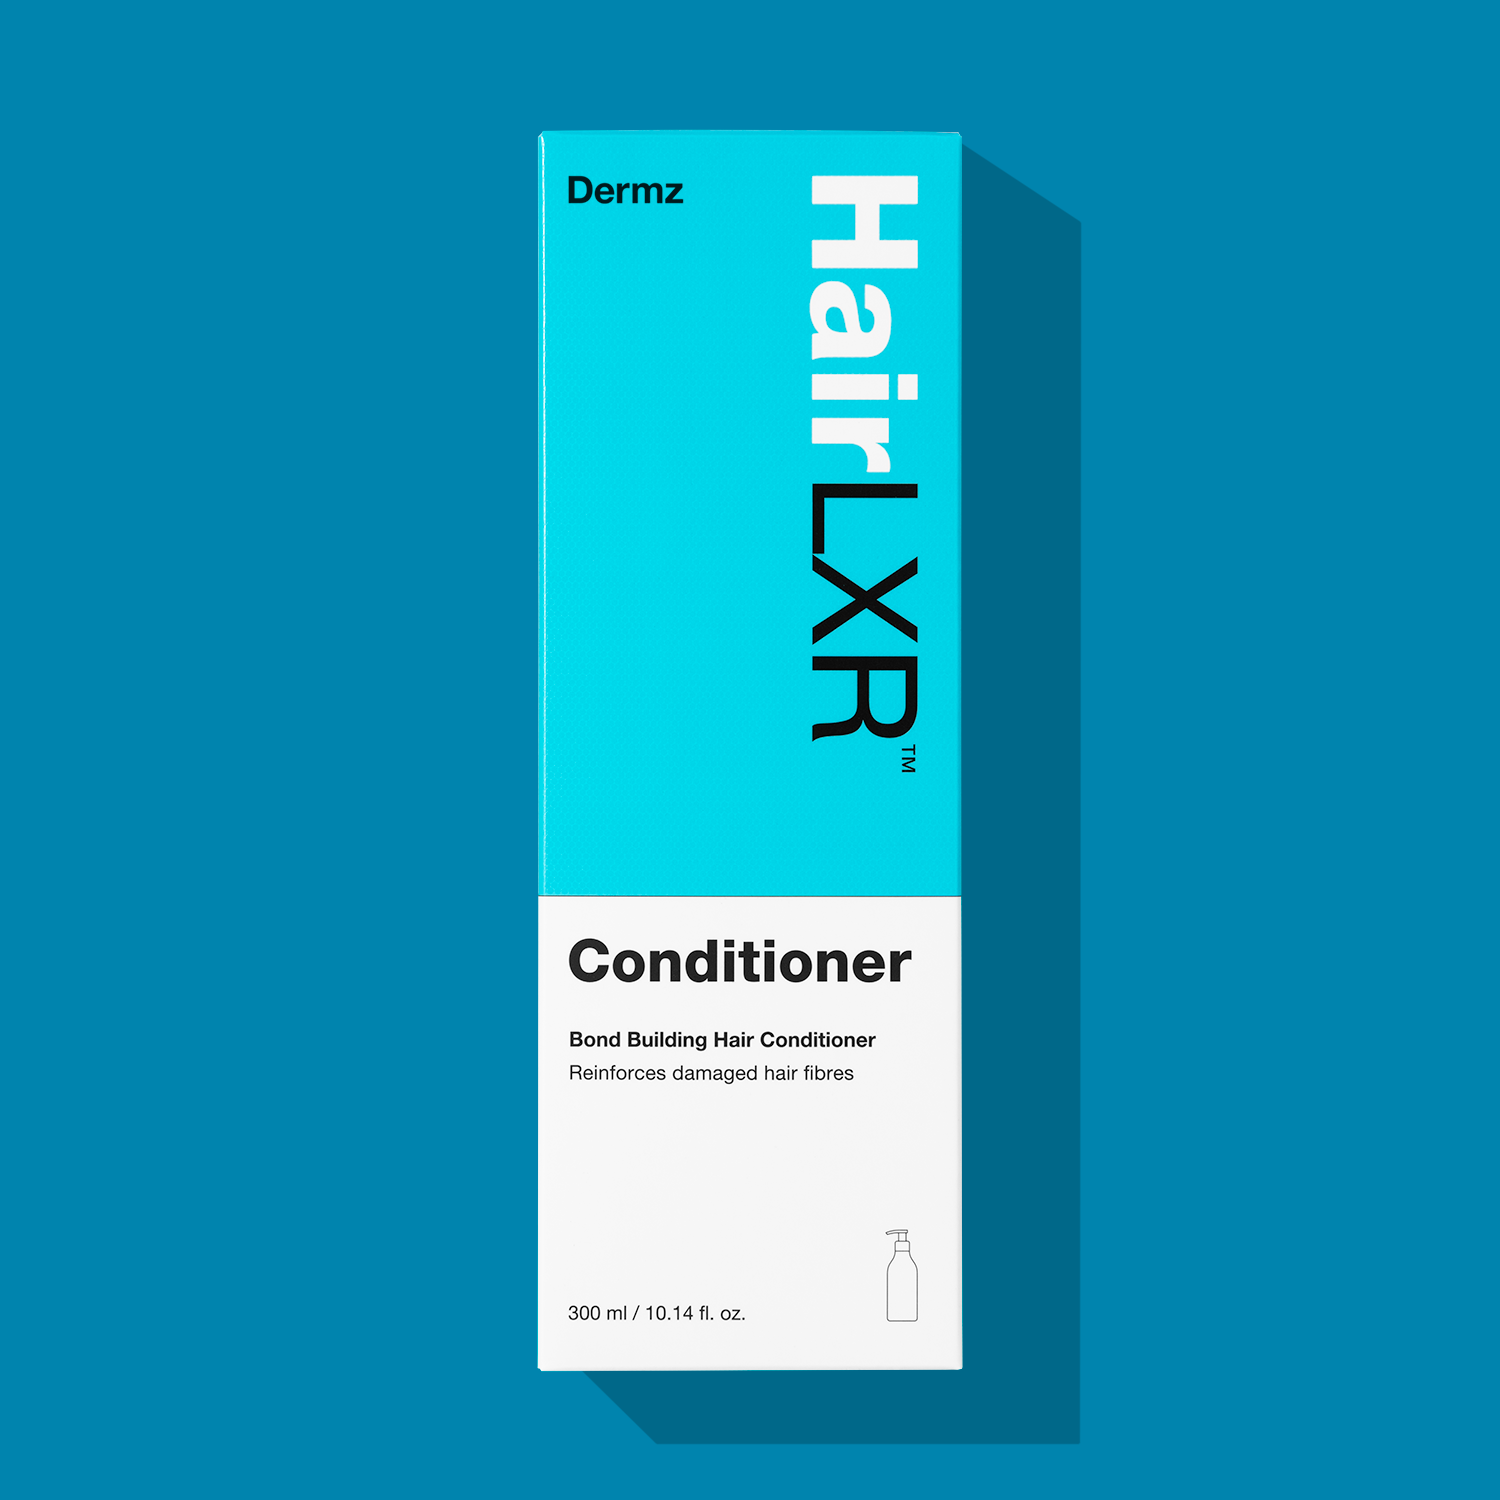 HairLXR Conditioner